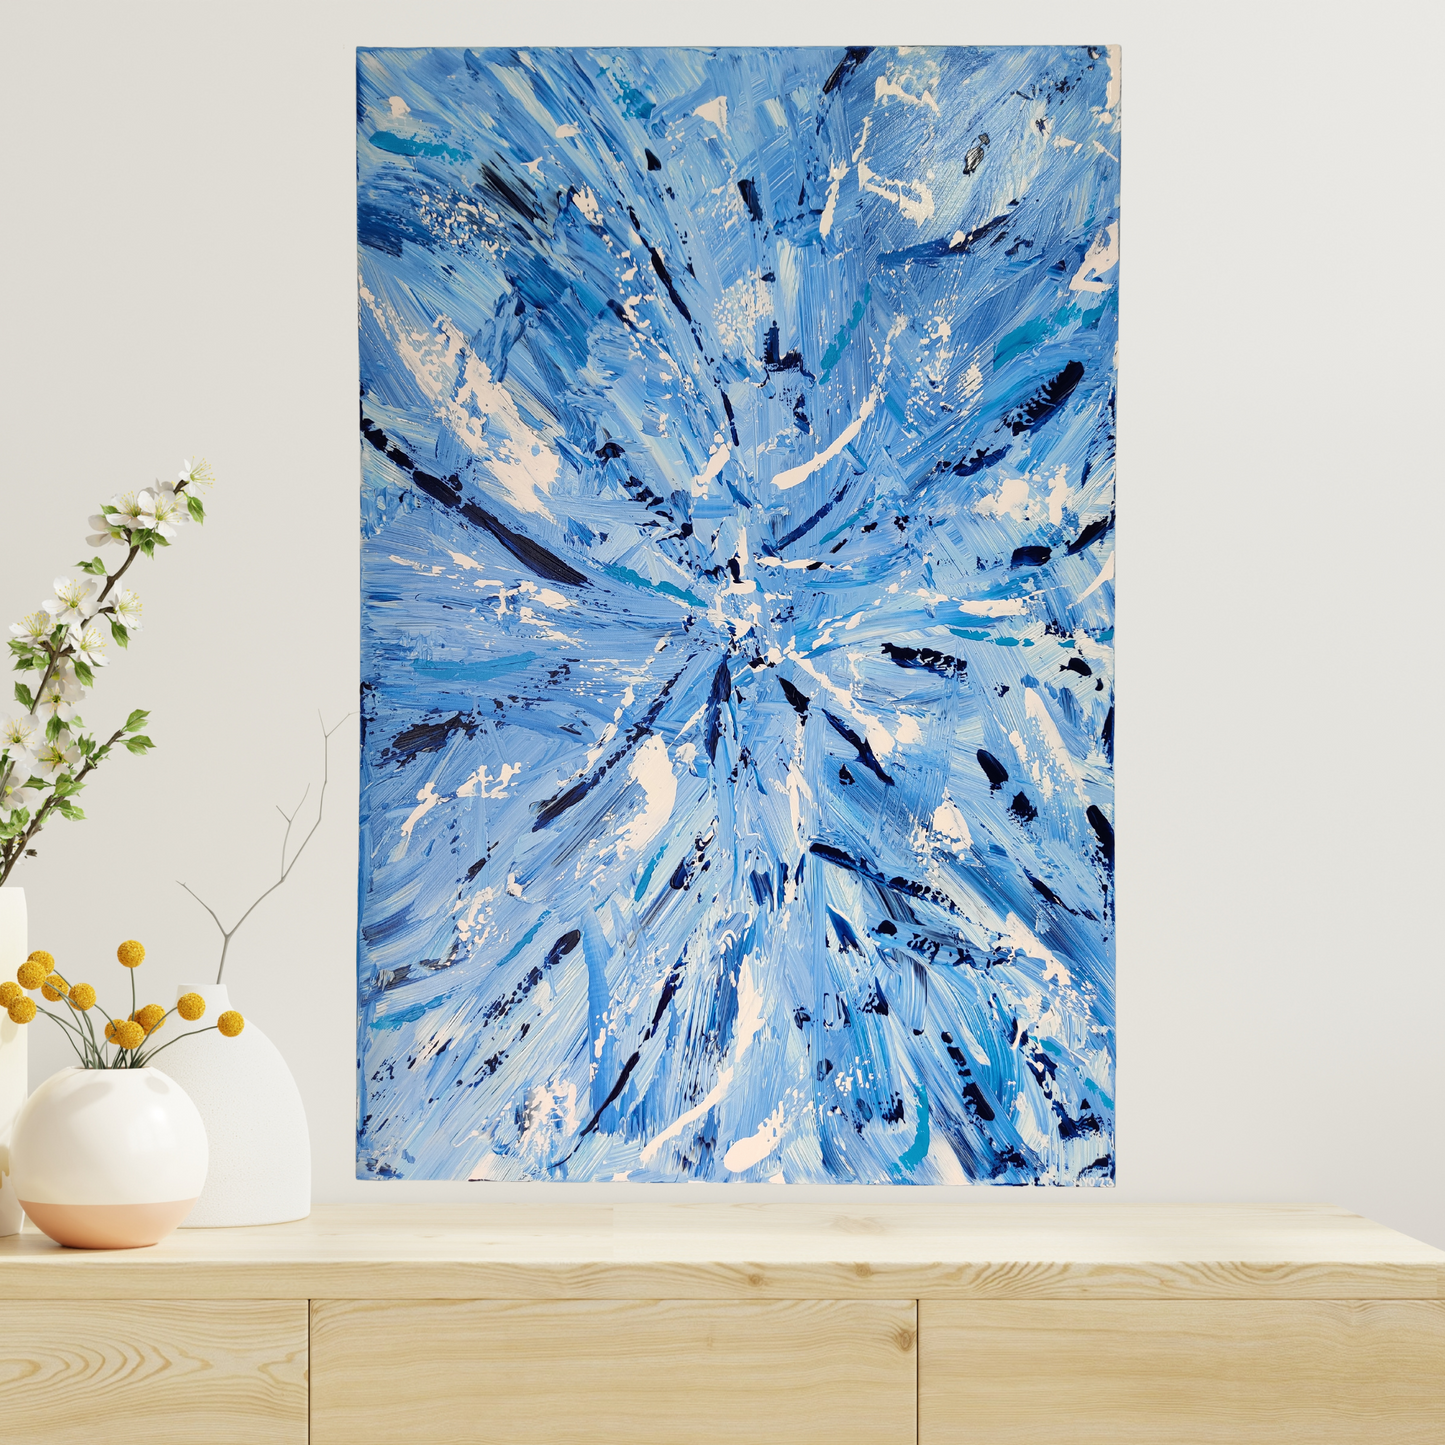 Splash of Blue Acrylic Painting on Canvas